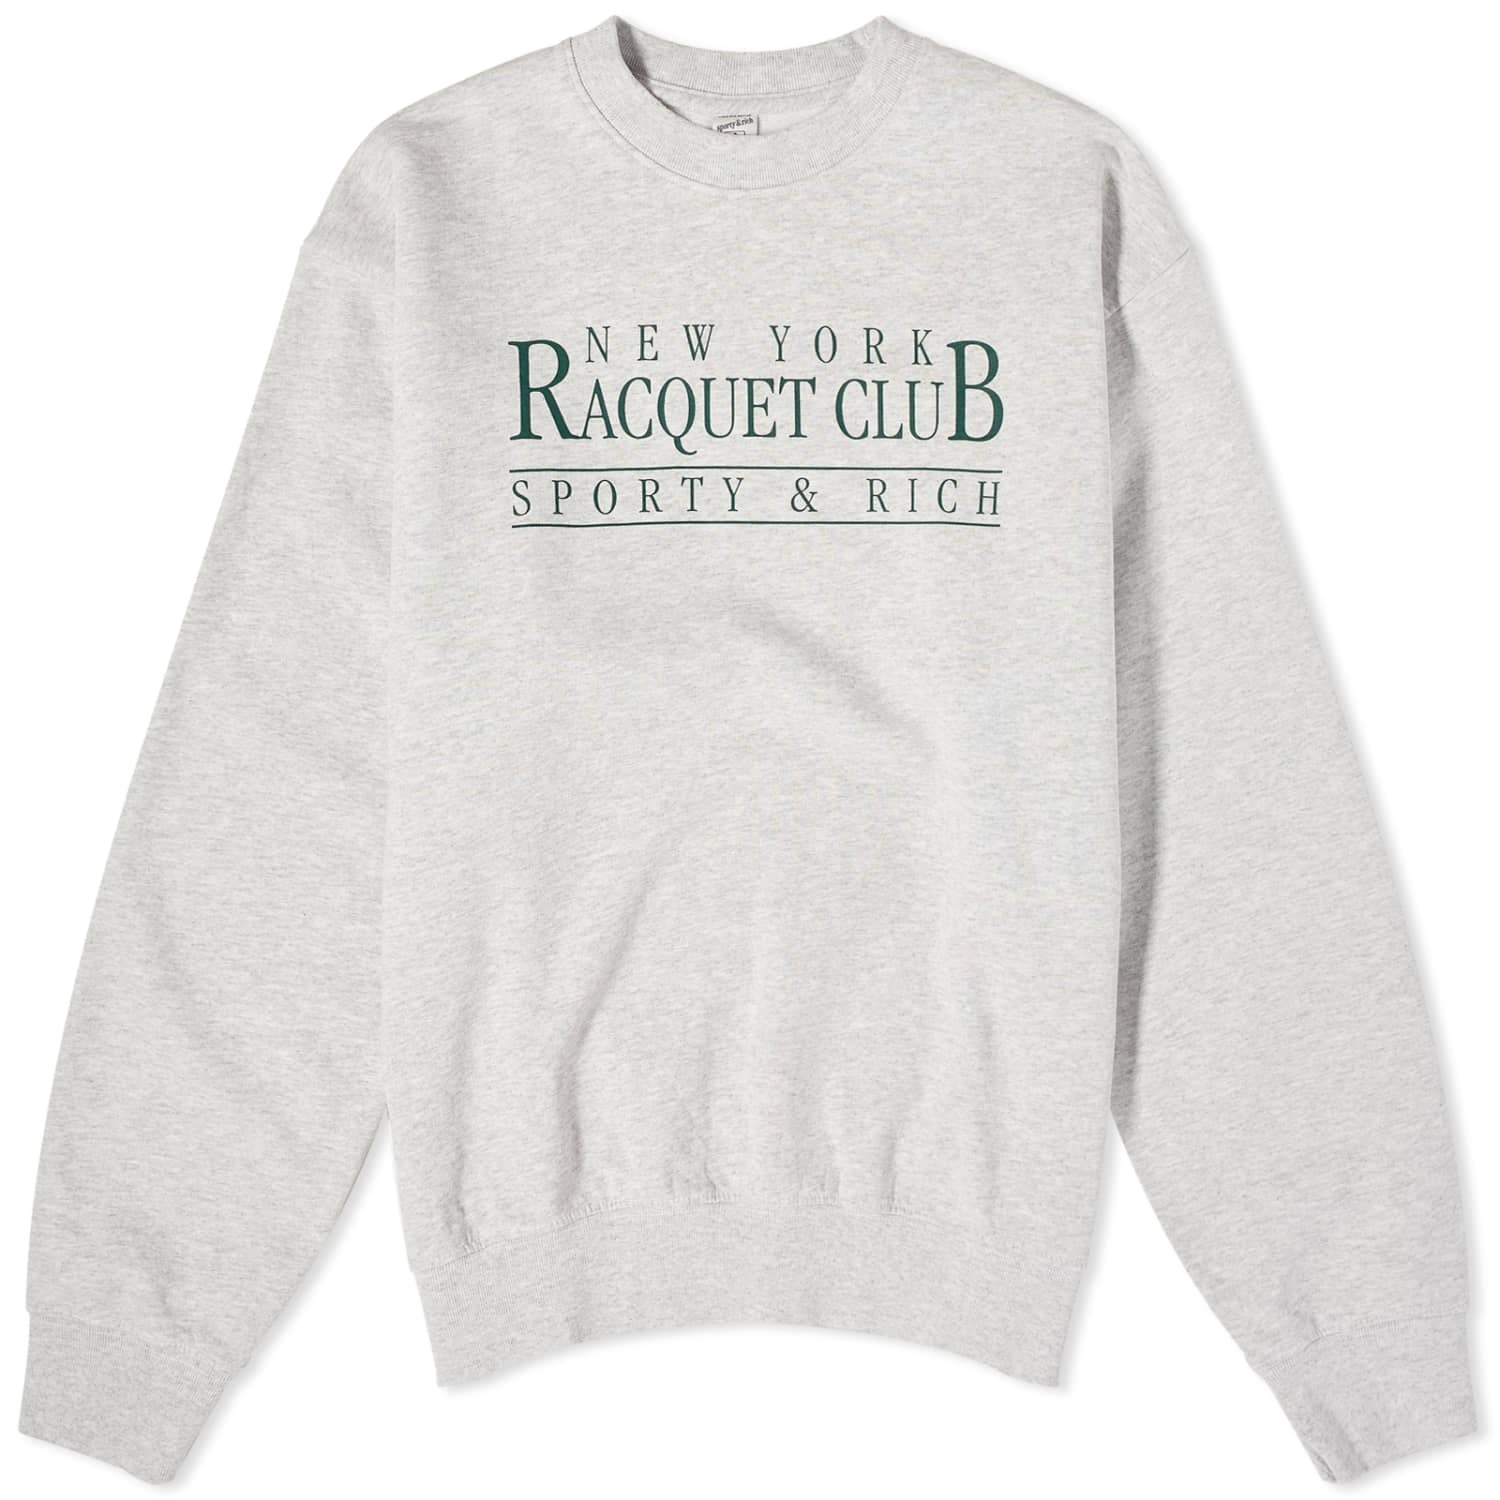 Свитшот Sporty & Rich Racquet Club, серый носки club house crew rubi